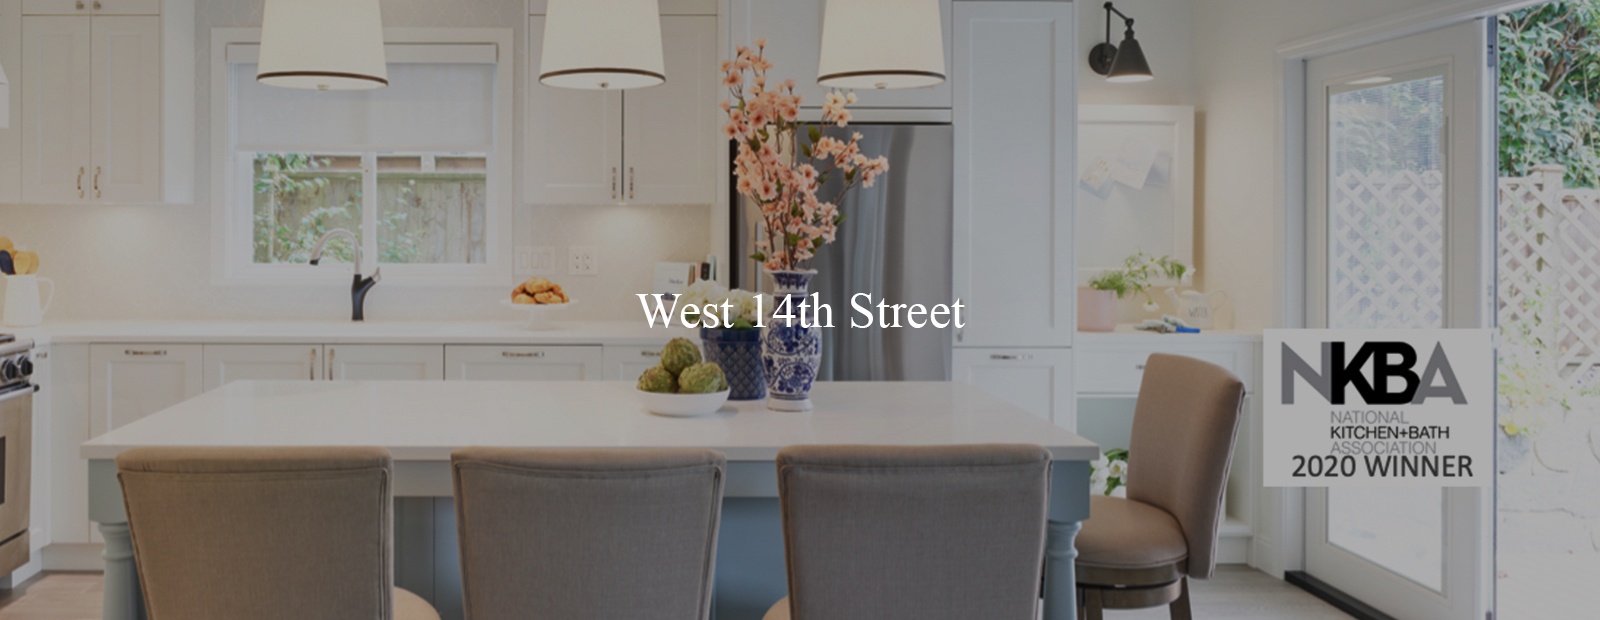 West 14th Street - Interior Design Company Vancouver